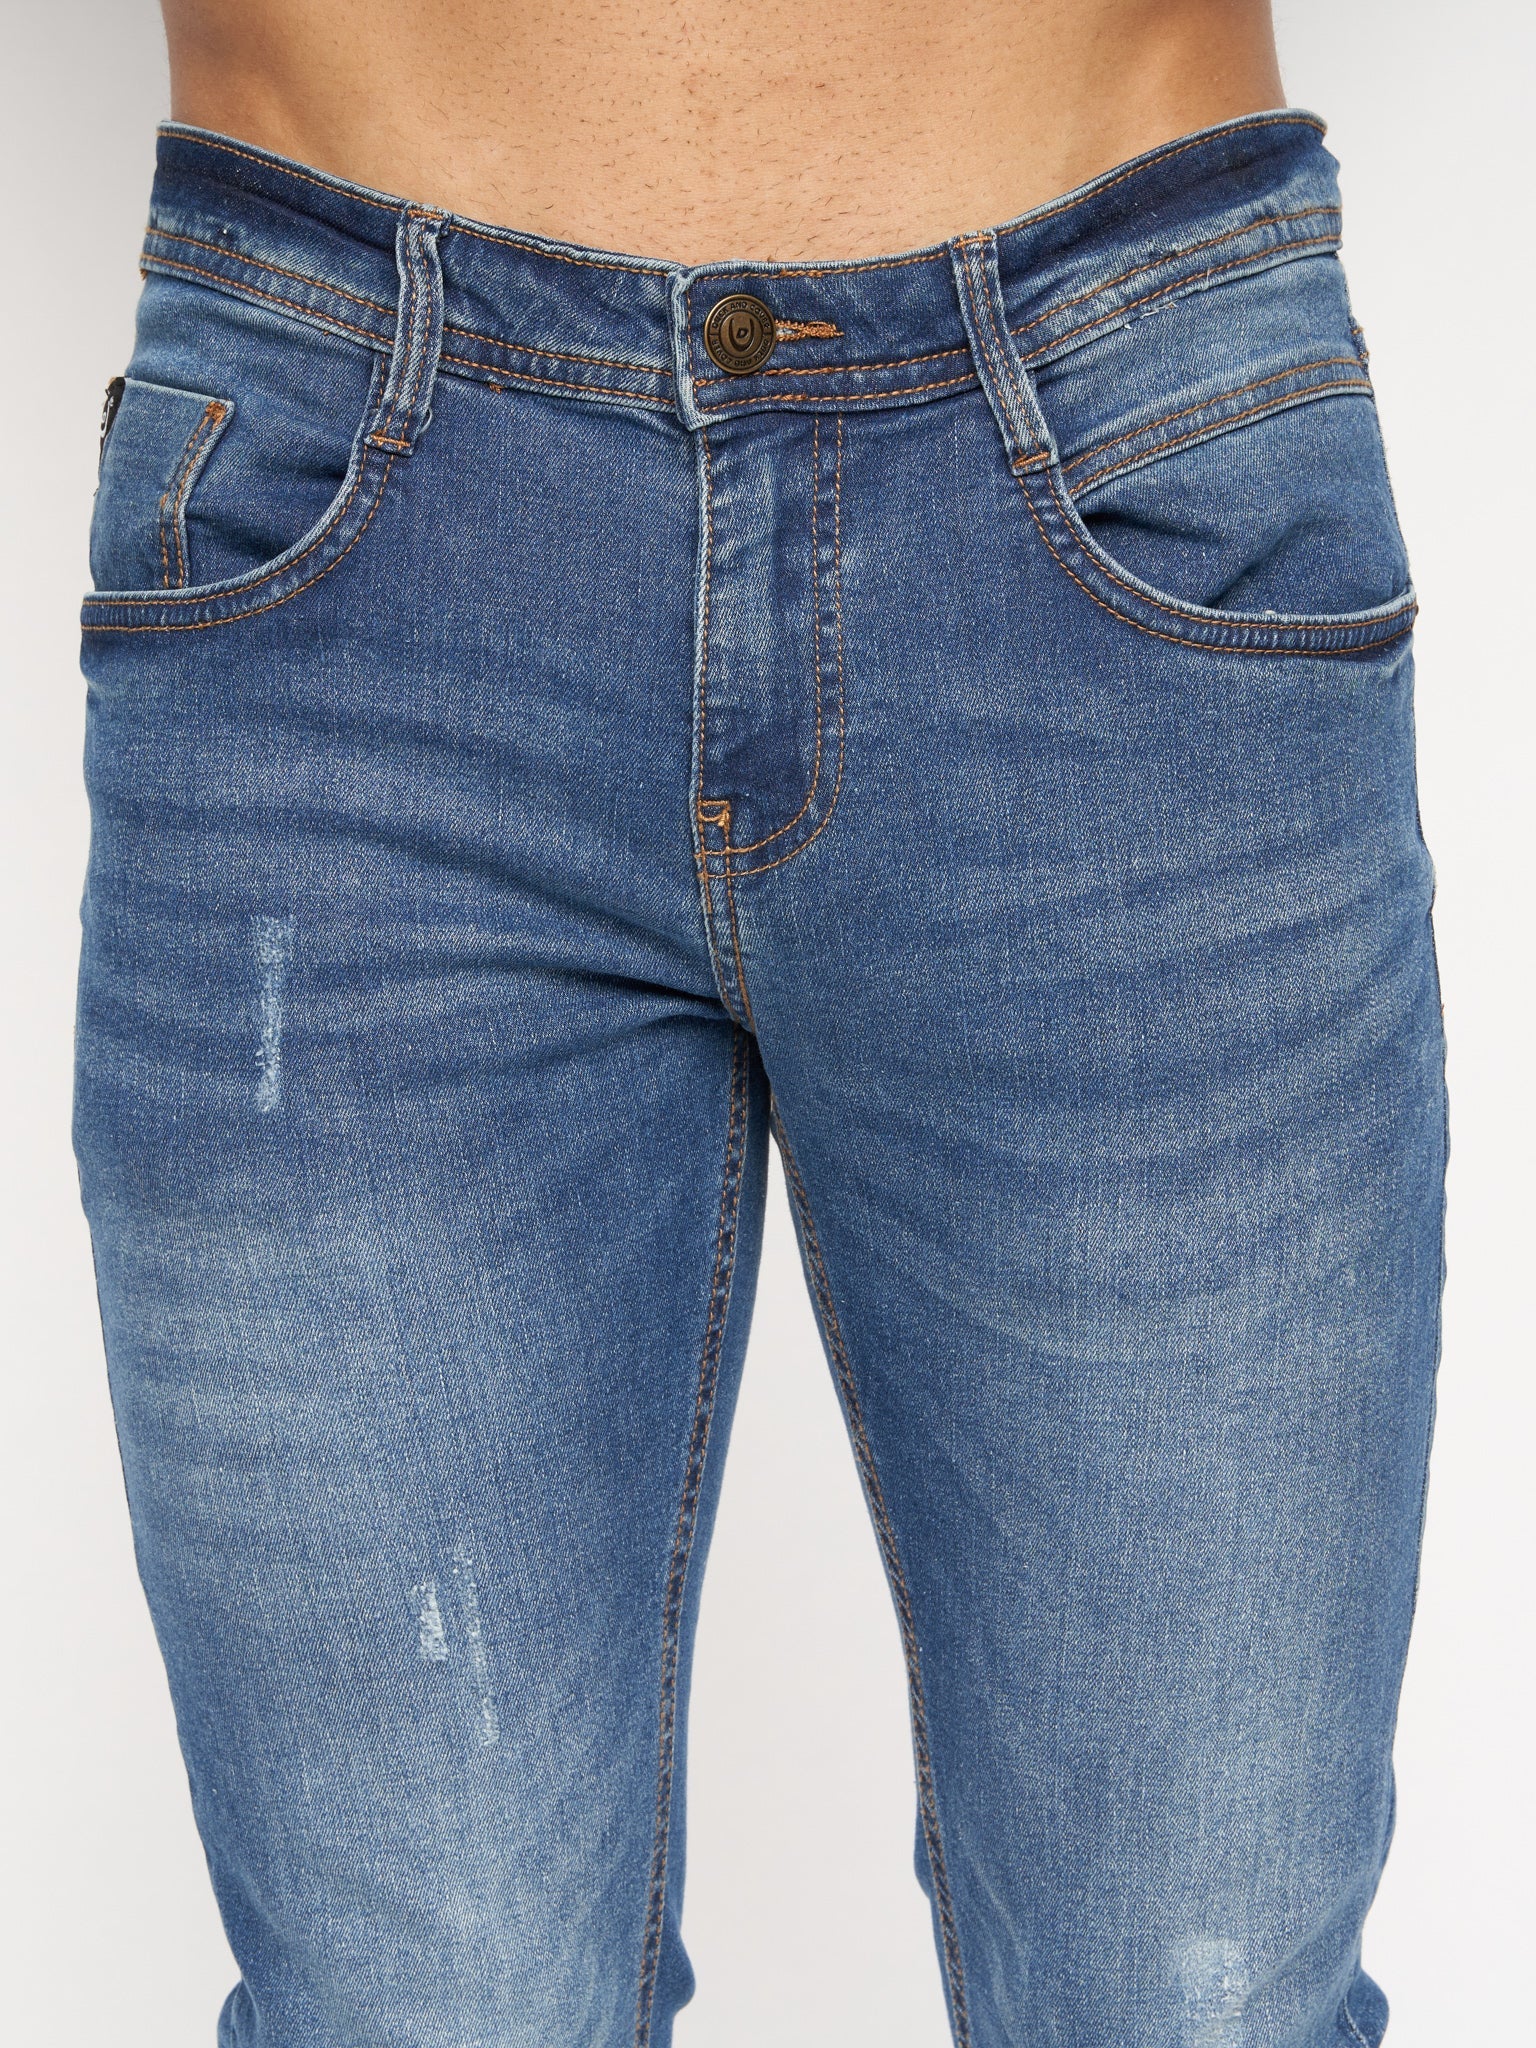 Tranfold Slim Fit Jeans Stone Wash